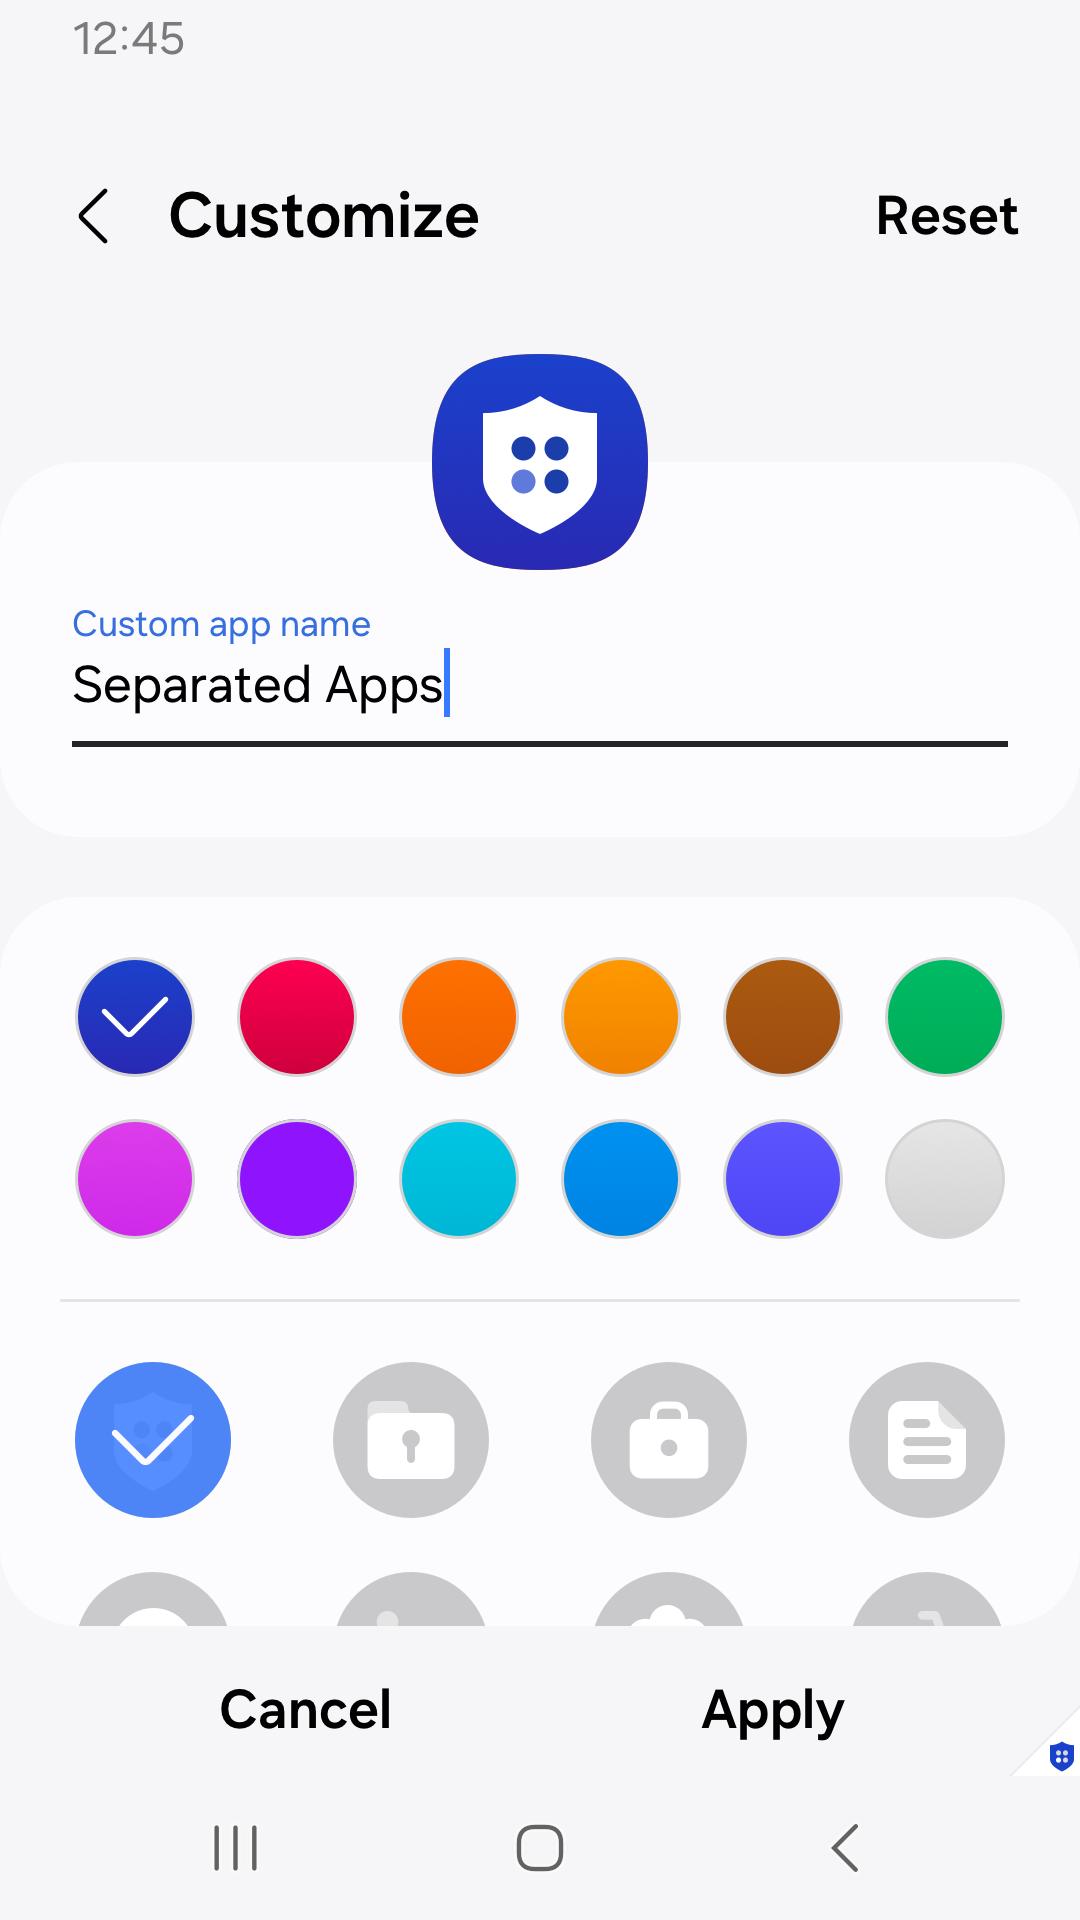 Separated apps что это